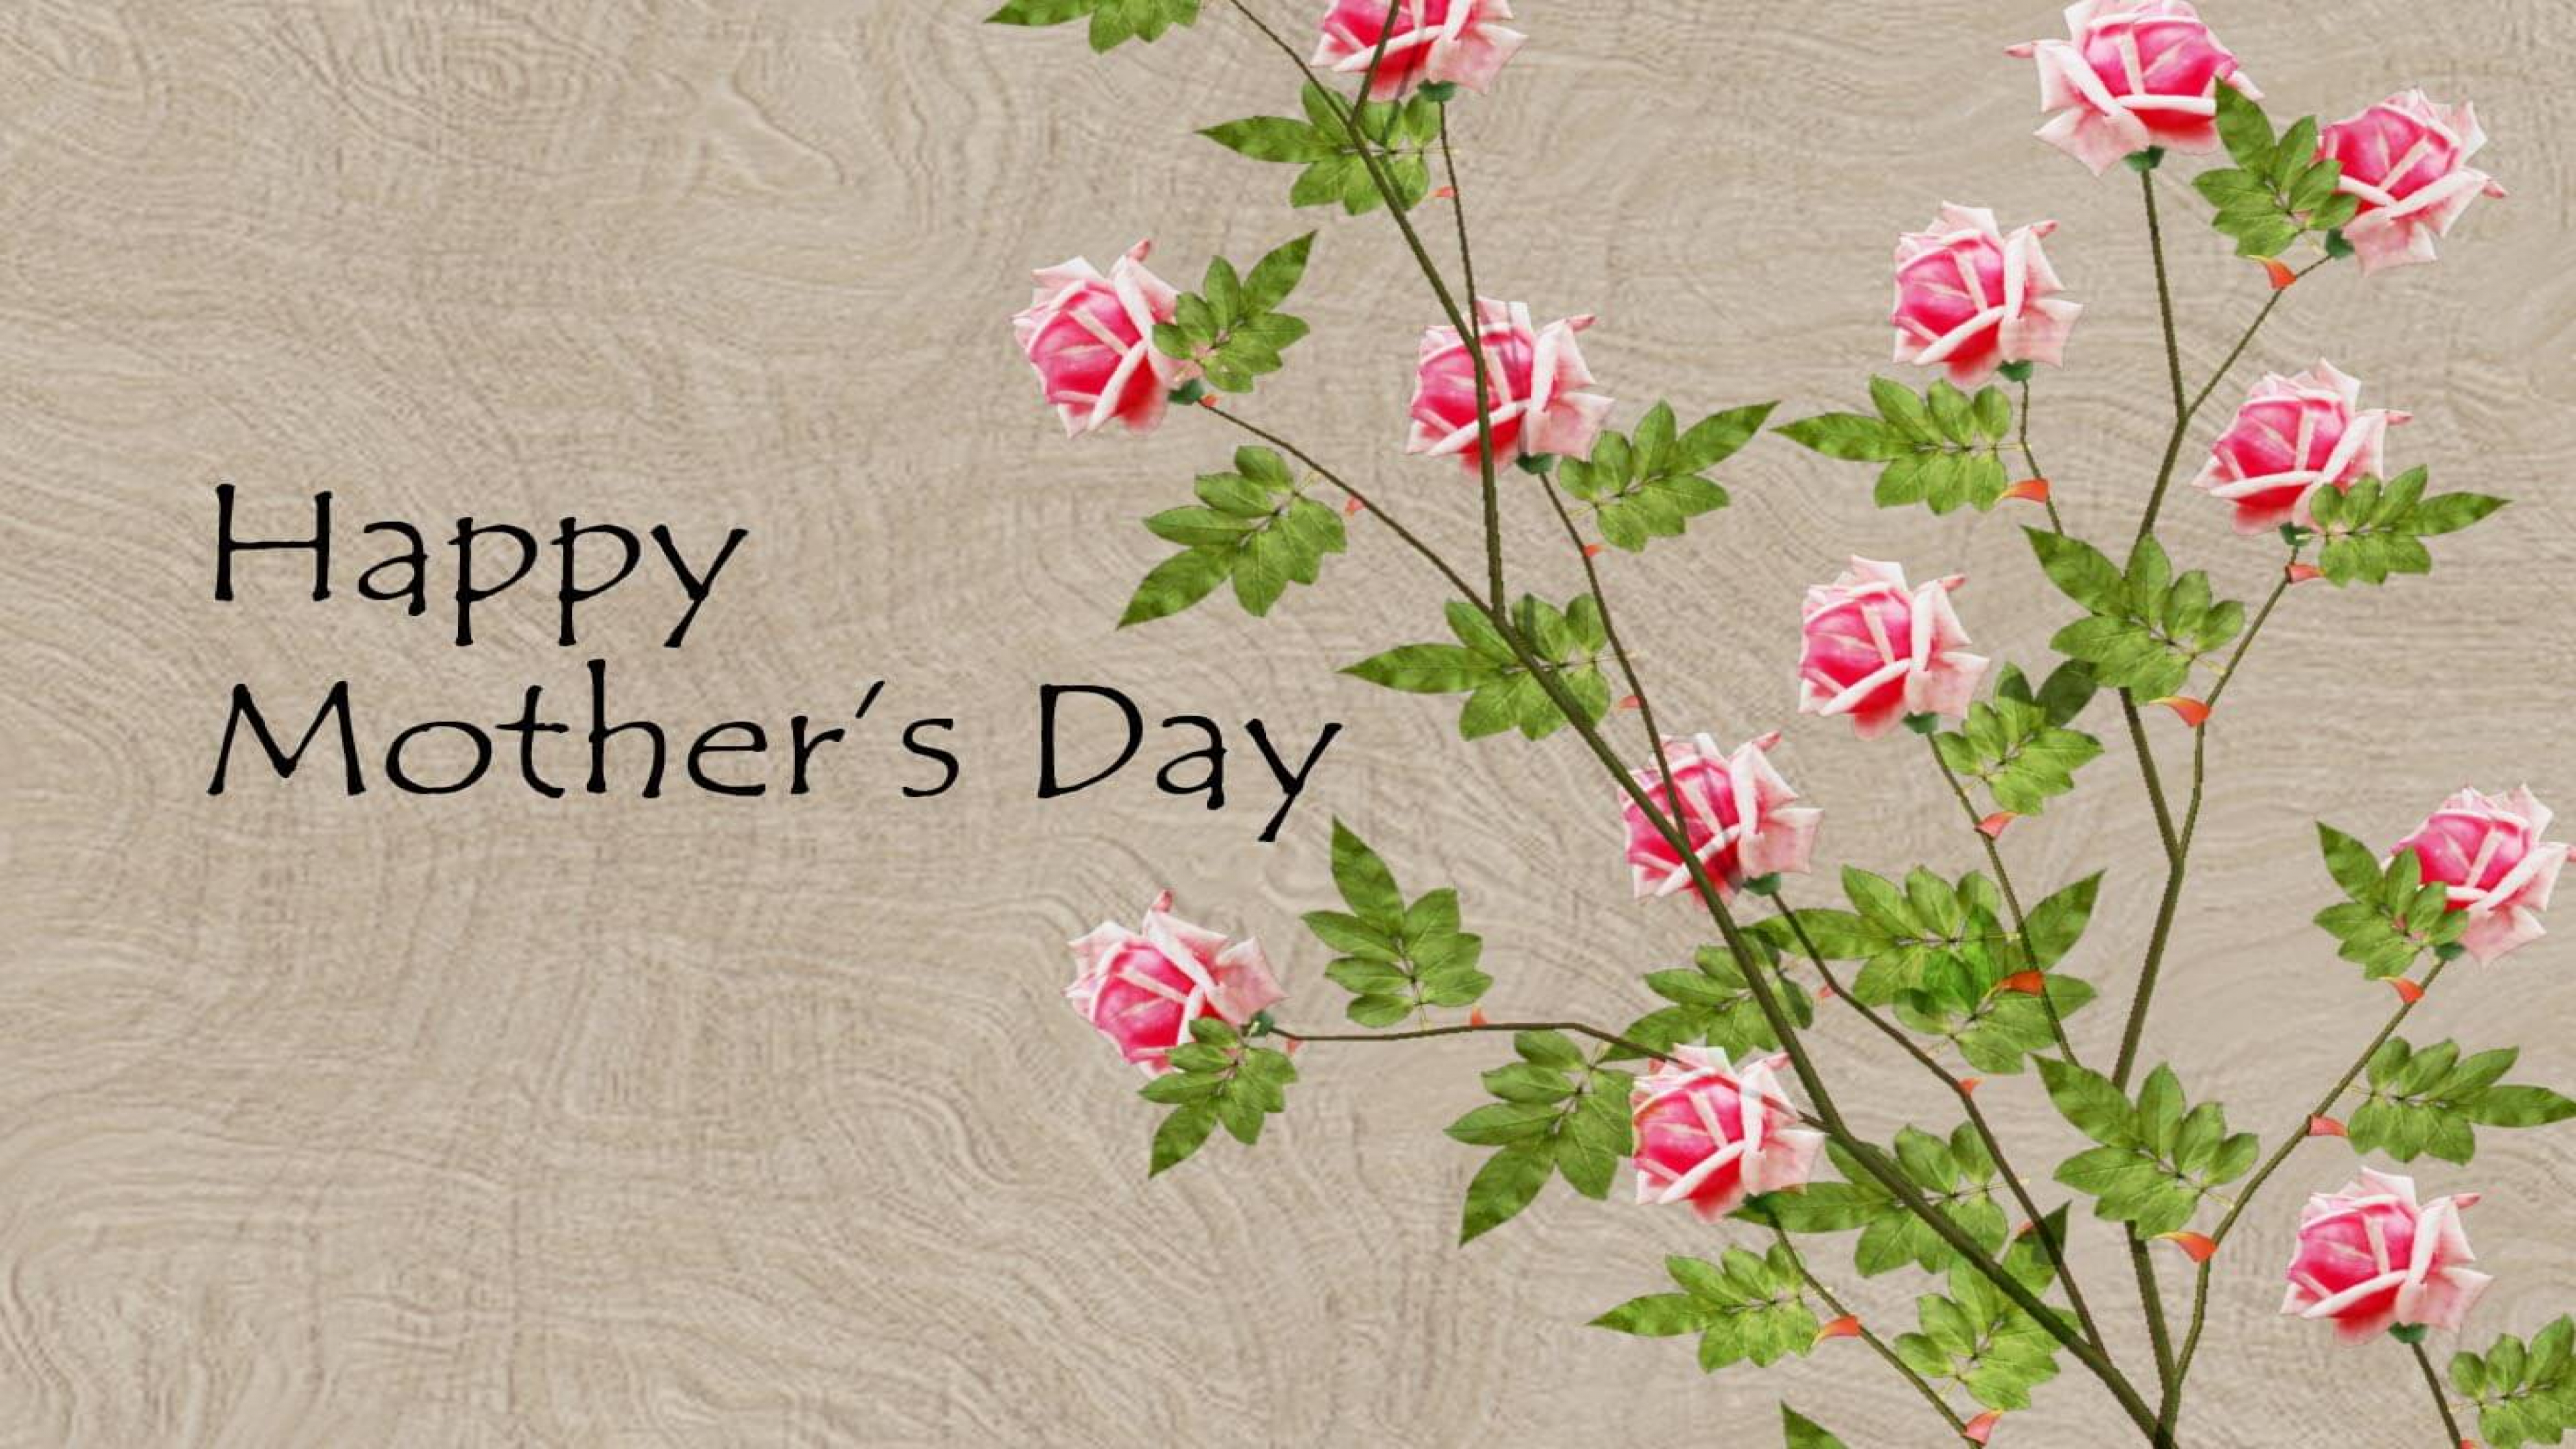 Телефон мамы на английском. Happy mother s Day. Mother's Day открытка. Мазерс Дэй. Поздравление с днем матери на английском.